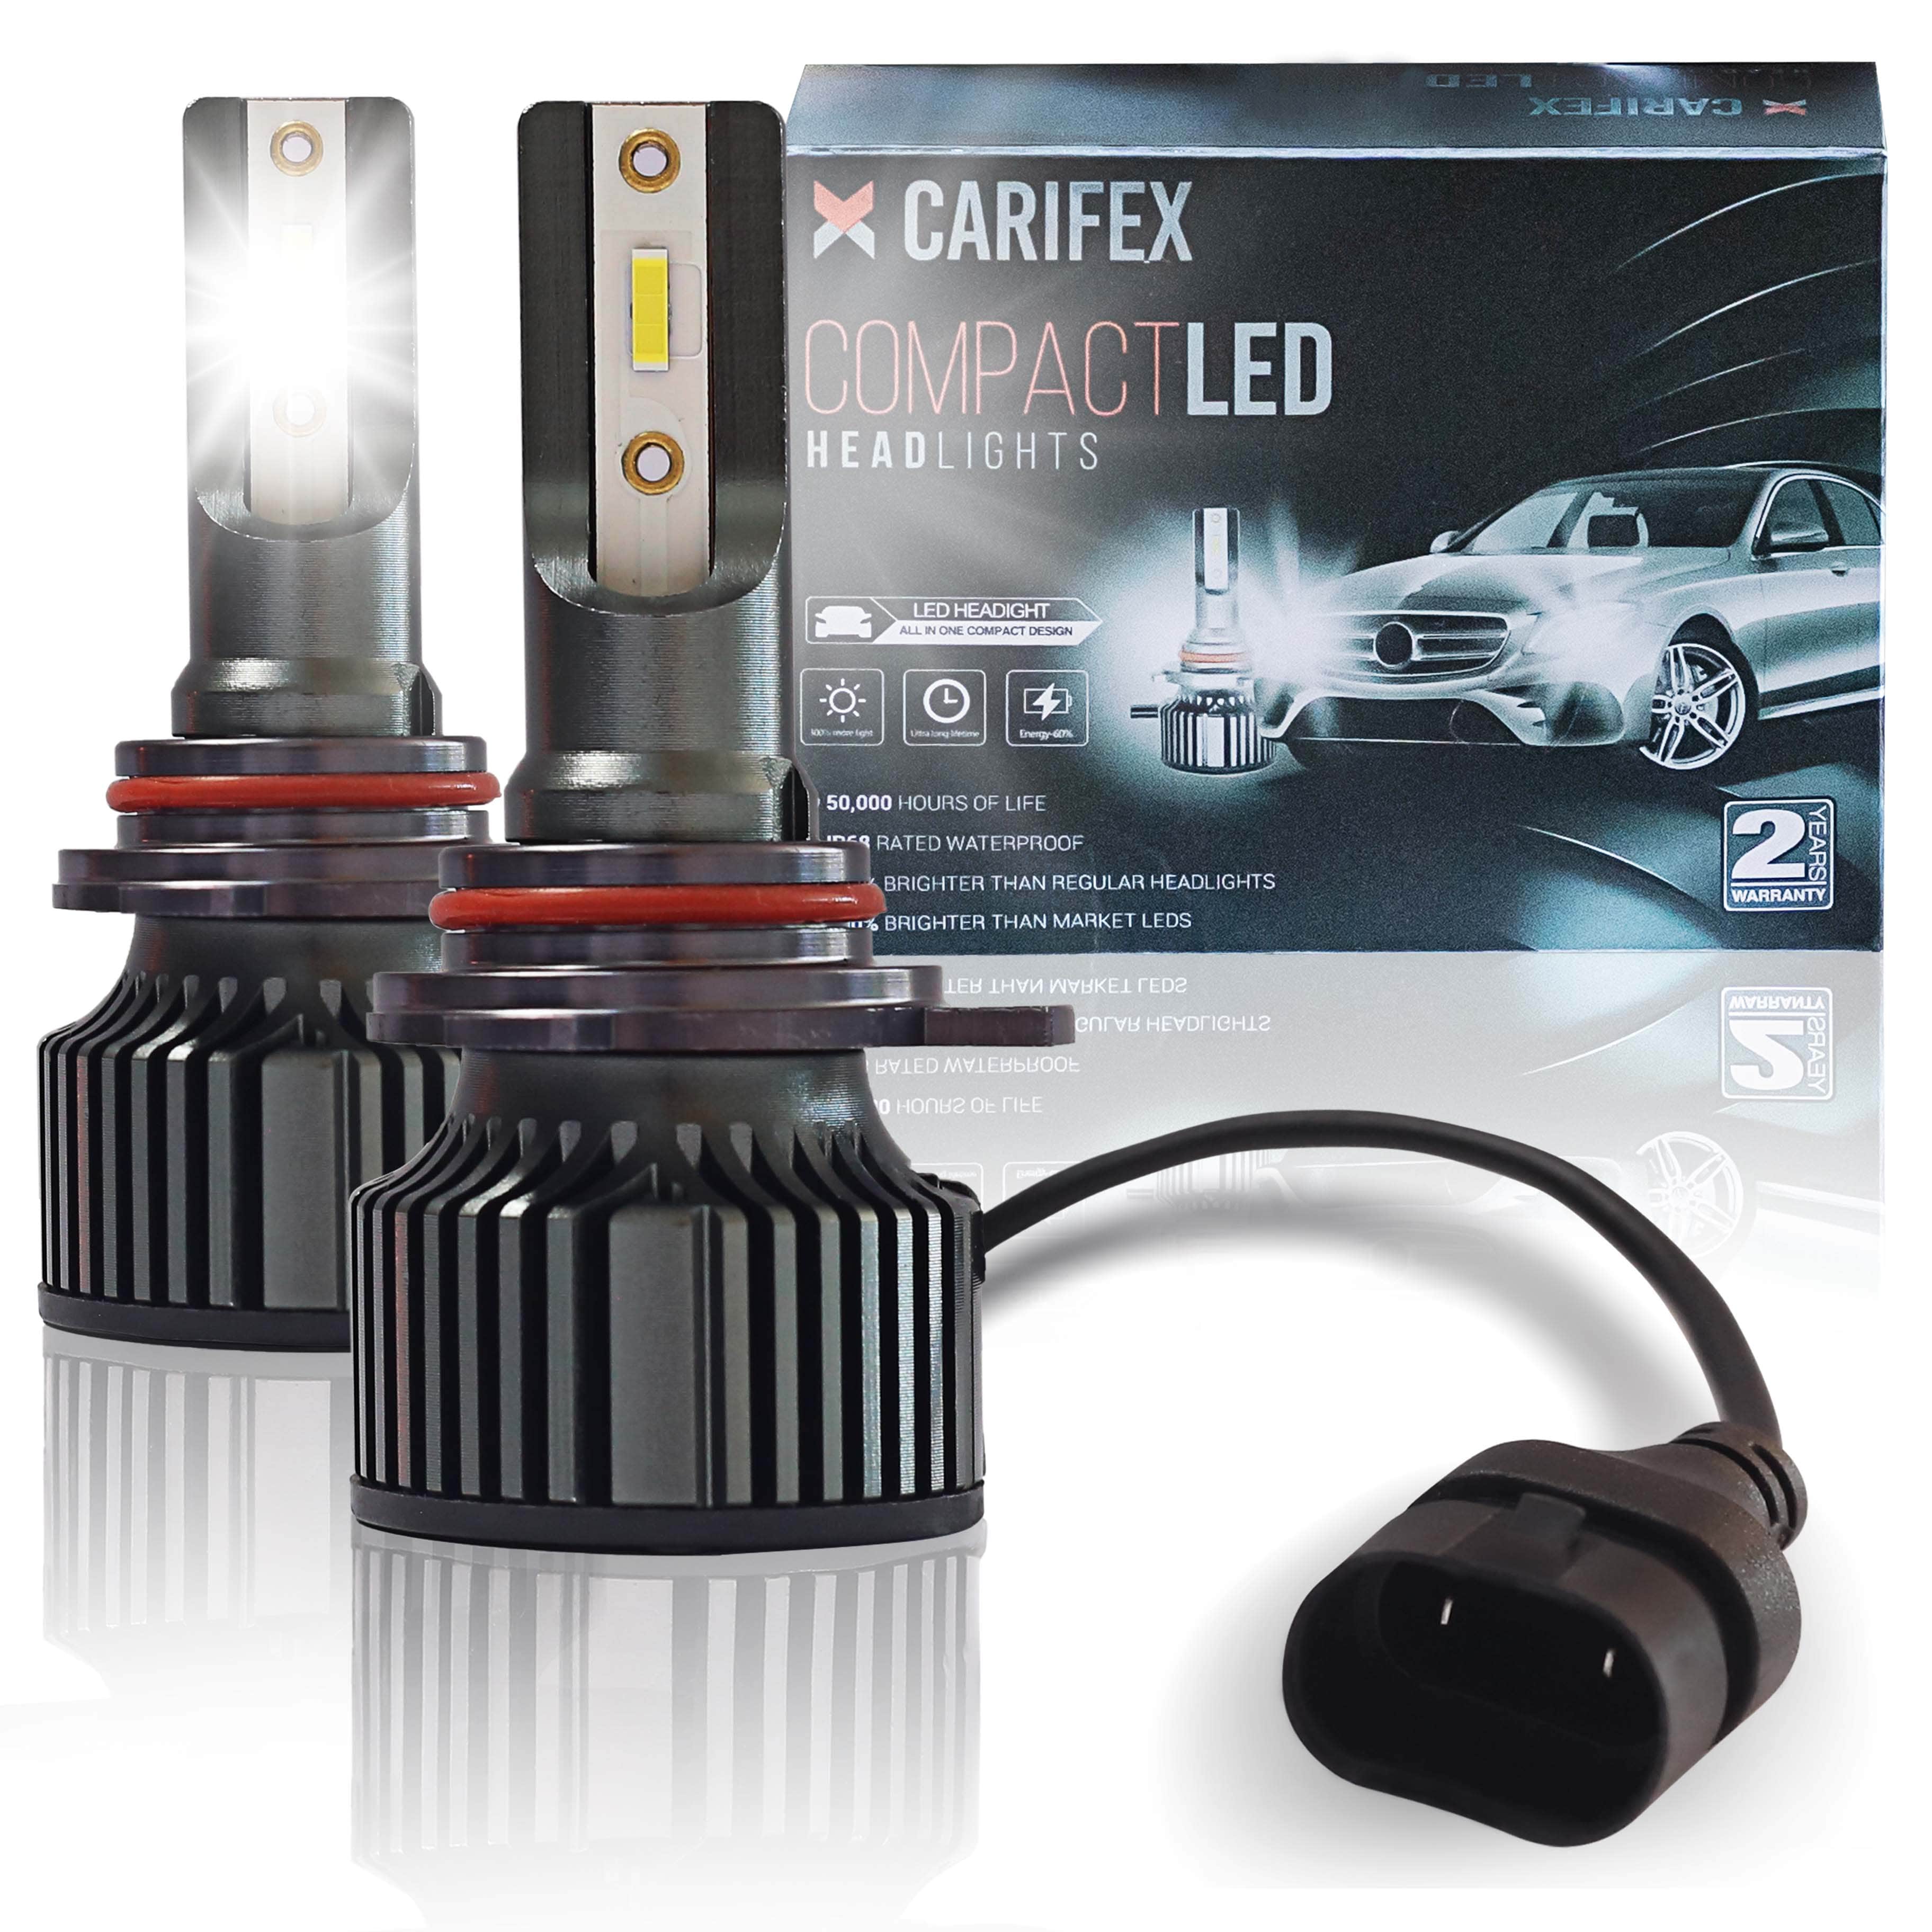 Carifex Compact LED Headlight Compact 9012 LED Headlight Bulbs